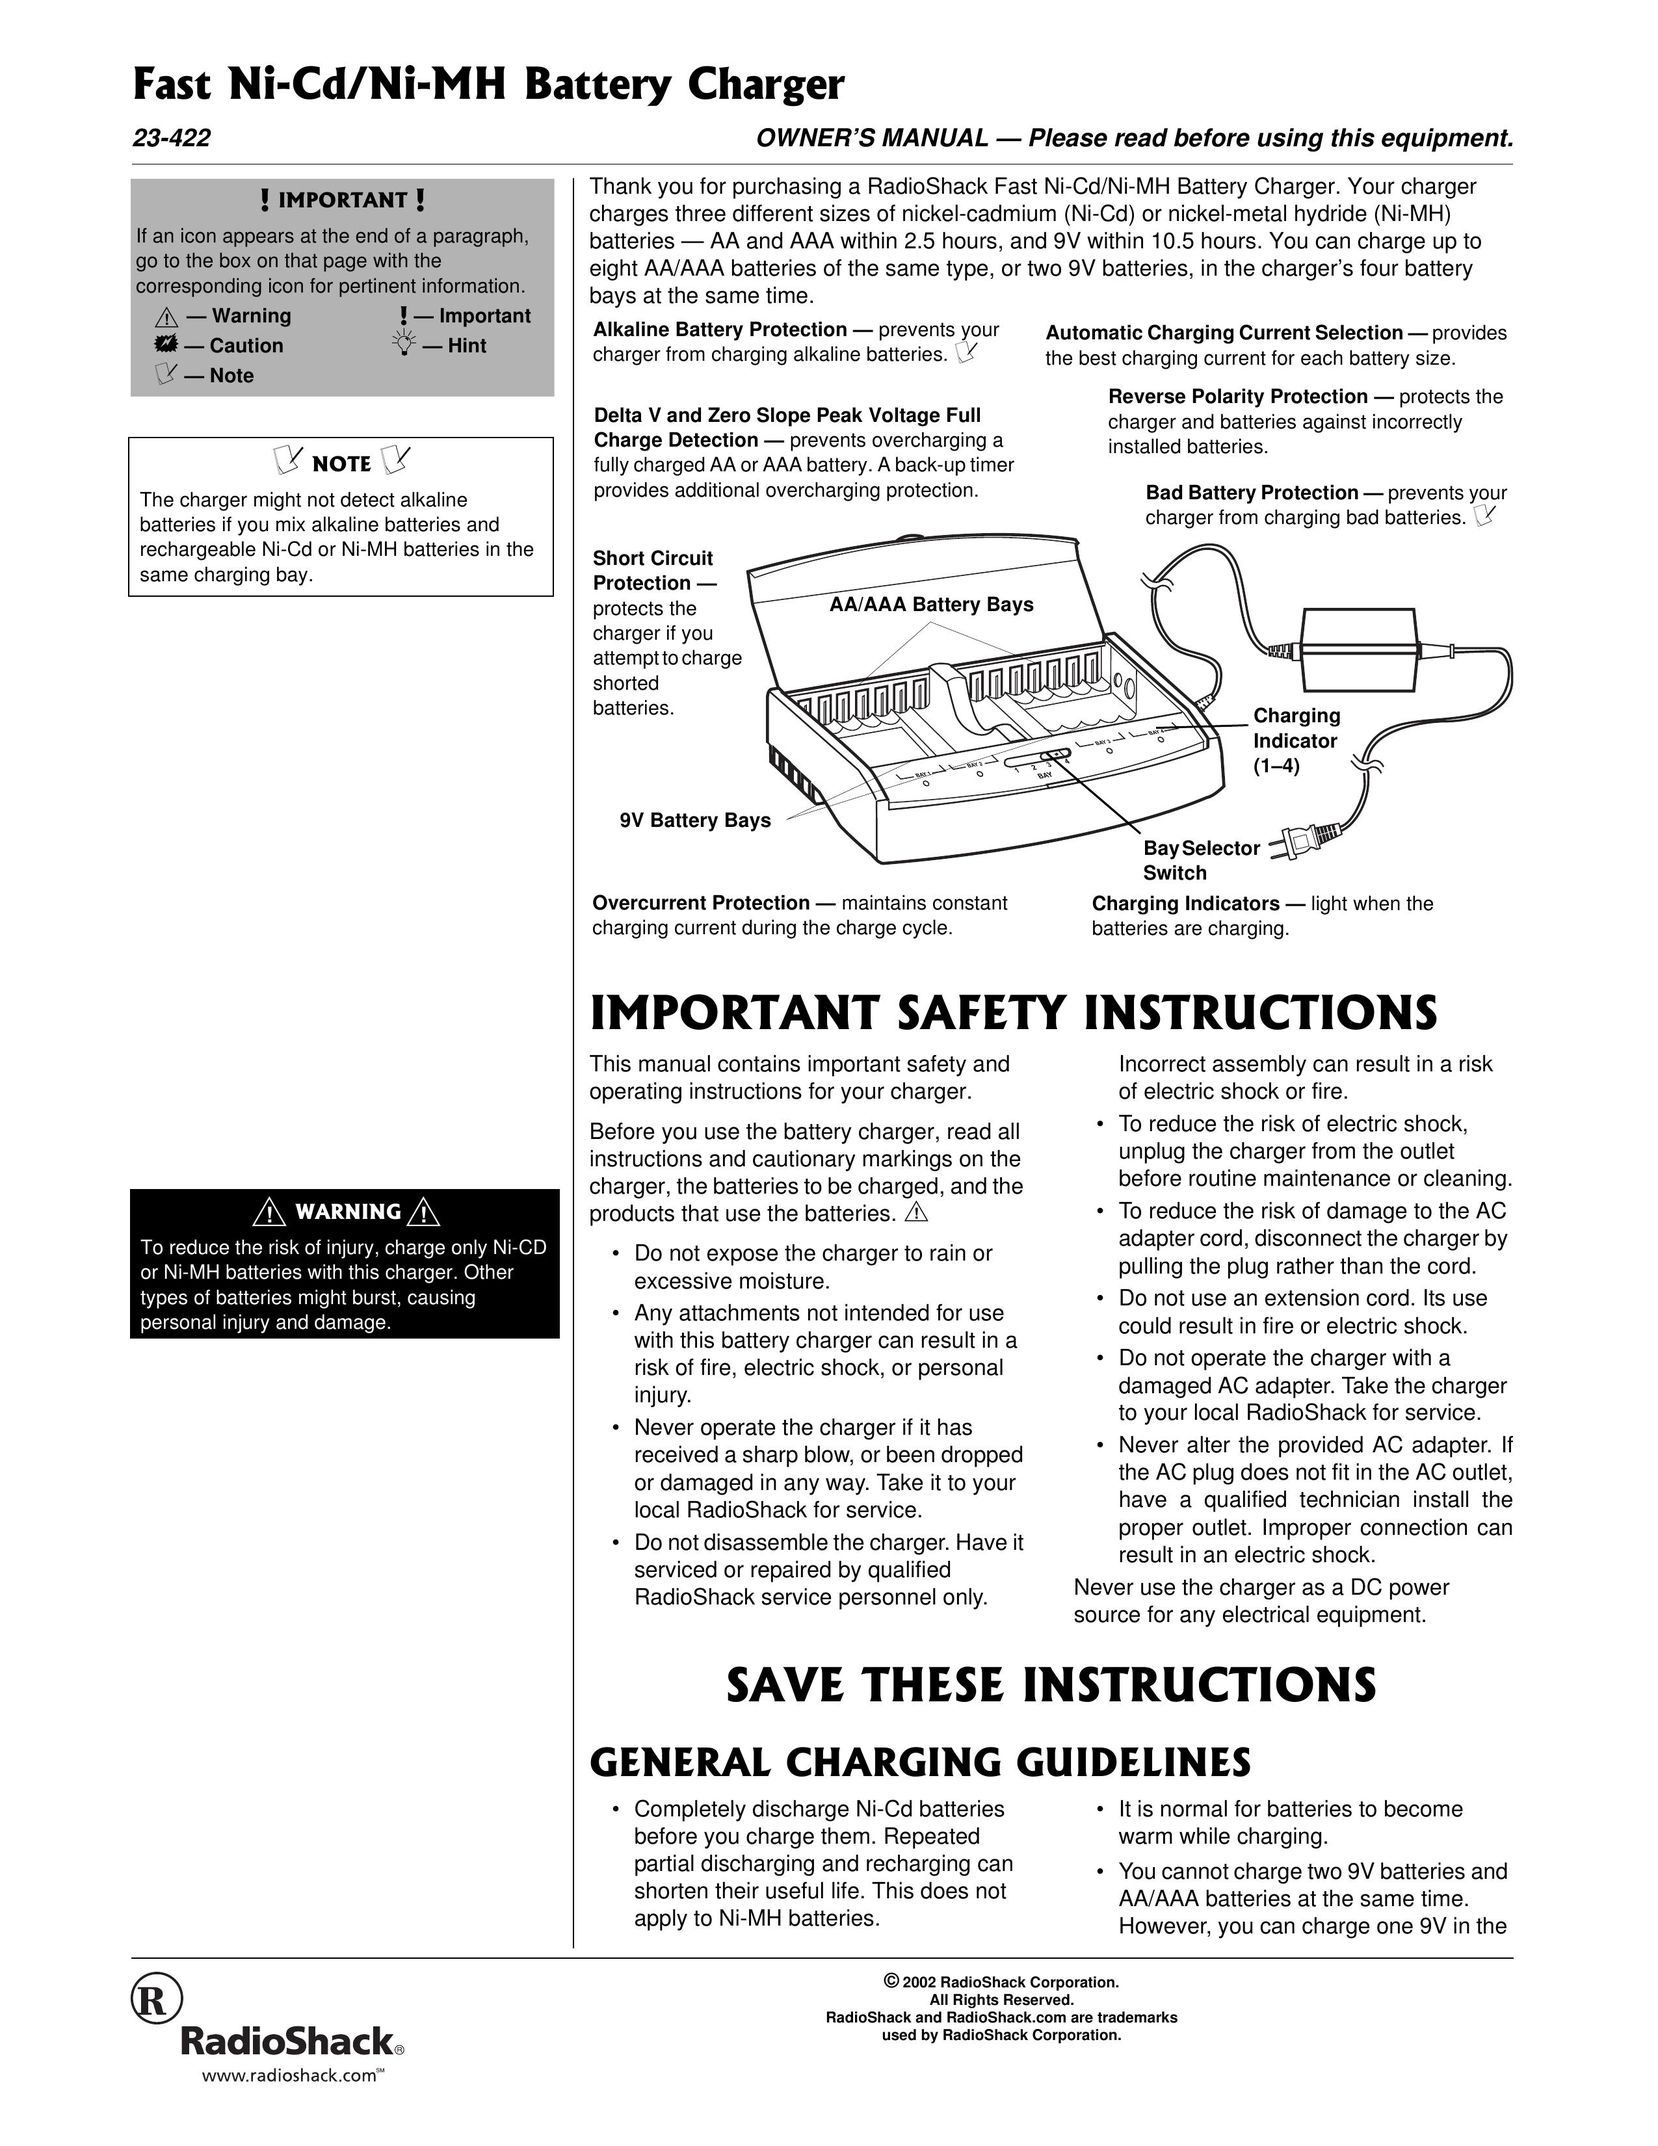 Raritan Computer 23-422 Battery Charger User Manual